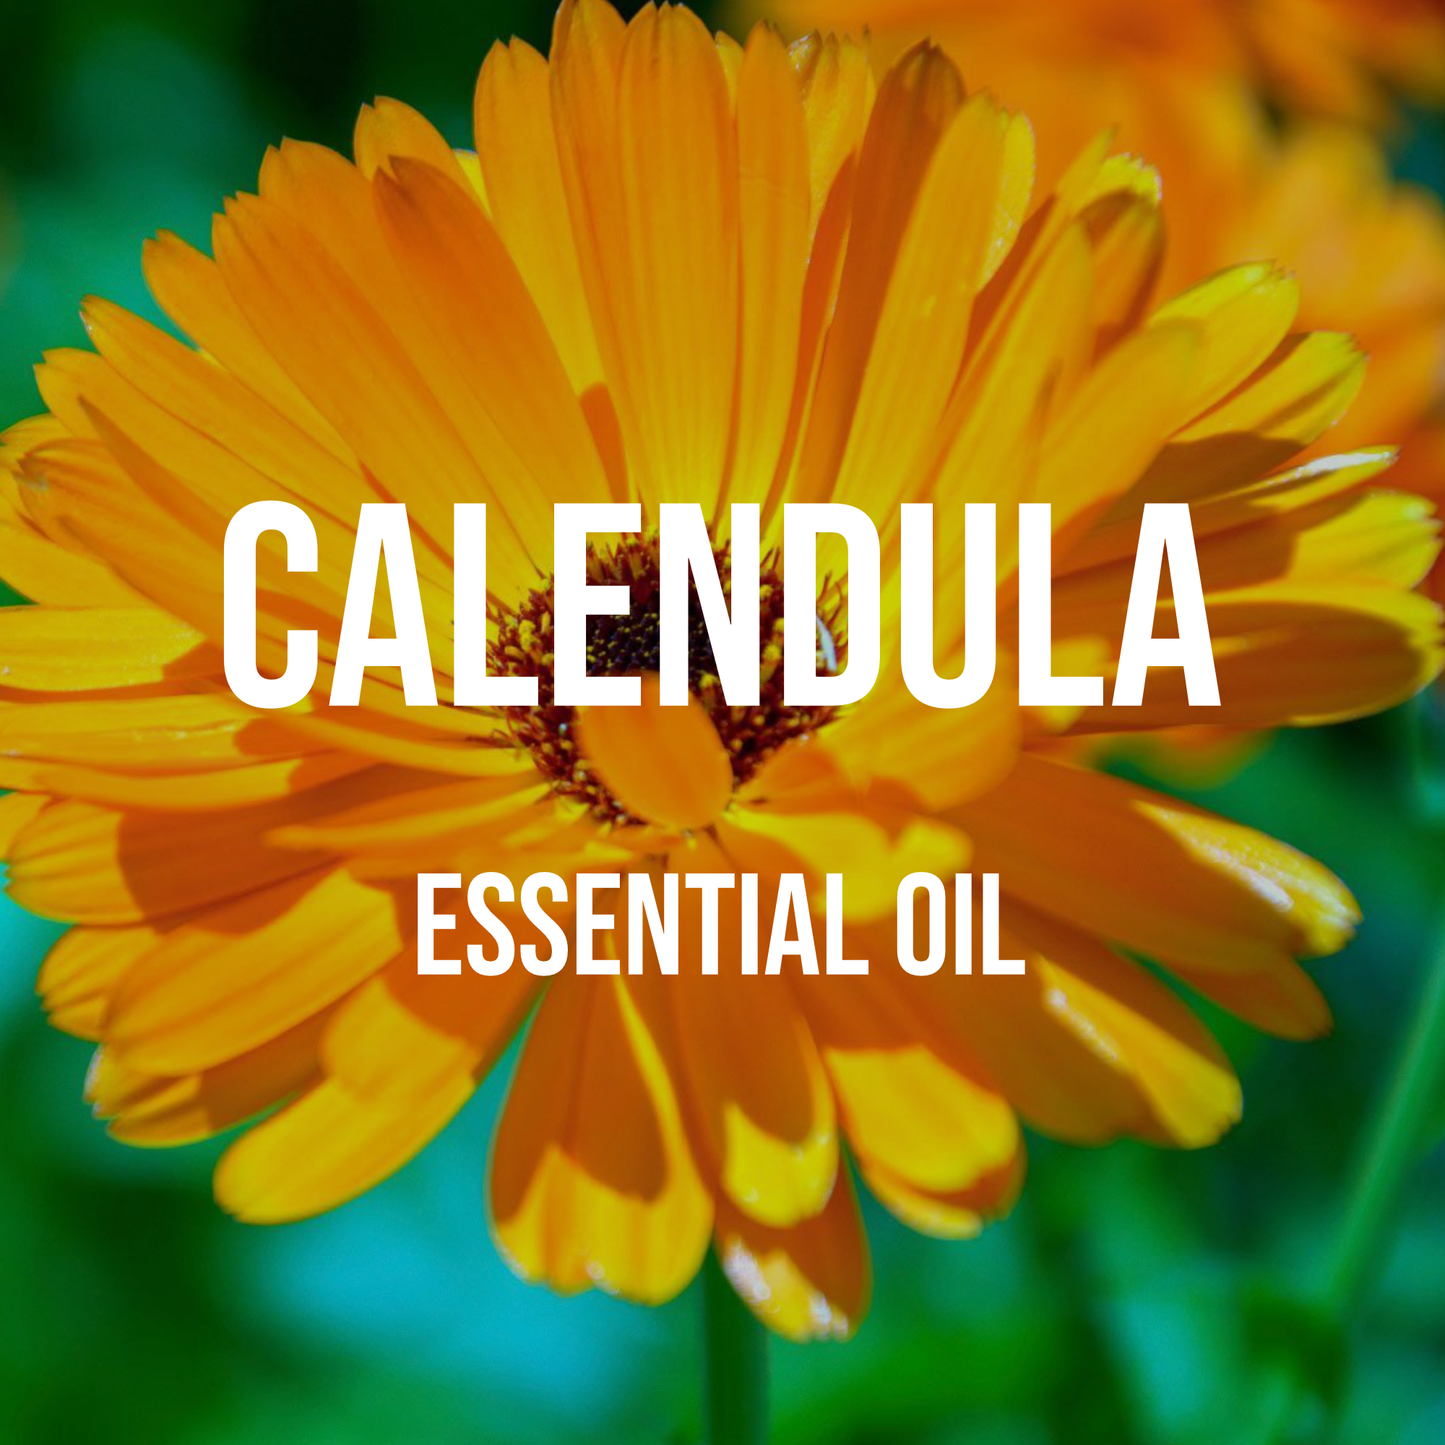 Calendula (Marigold) Essential Oil